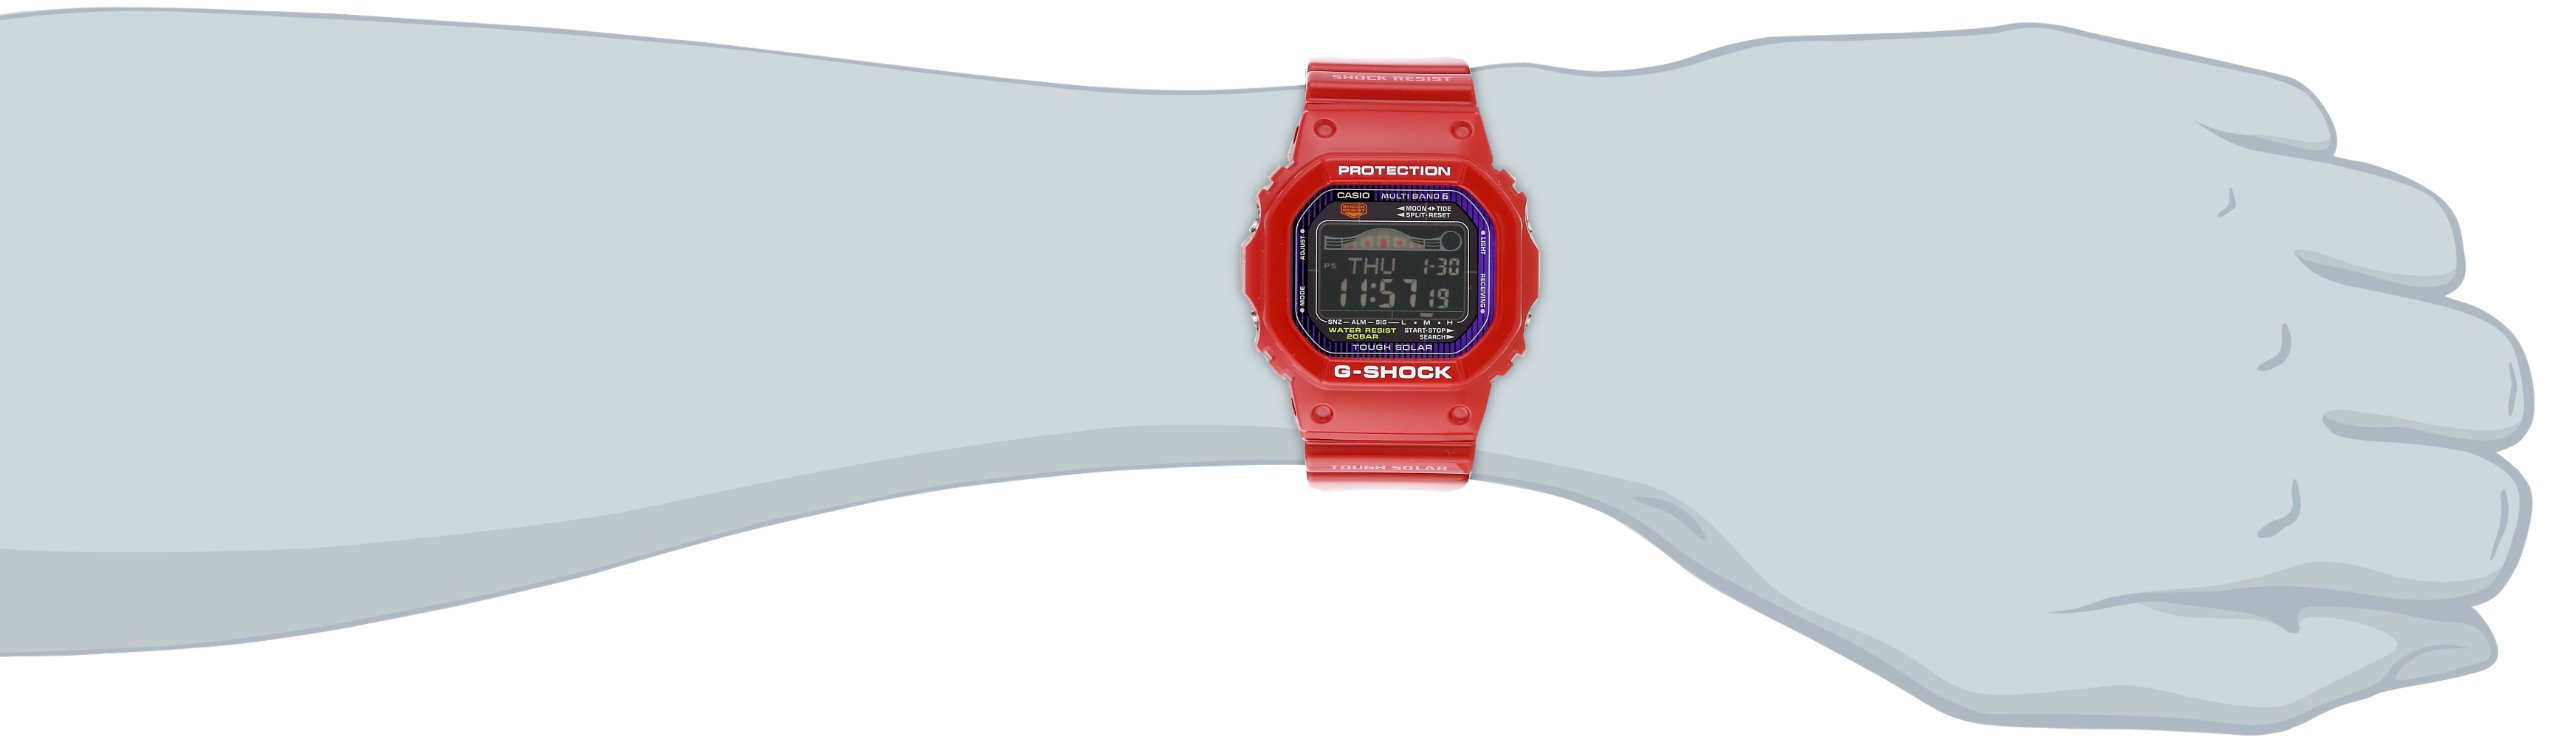 Casio Men's GWX5600C-4 G-Shock G-LIDE Red Resin Digital Watch